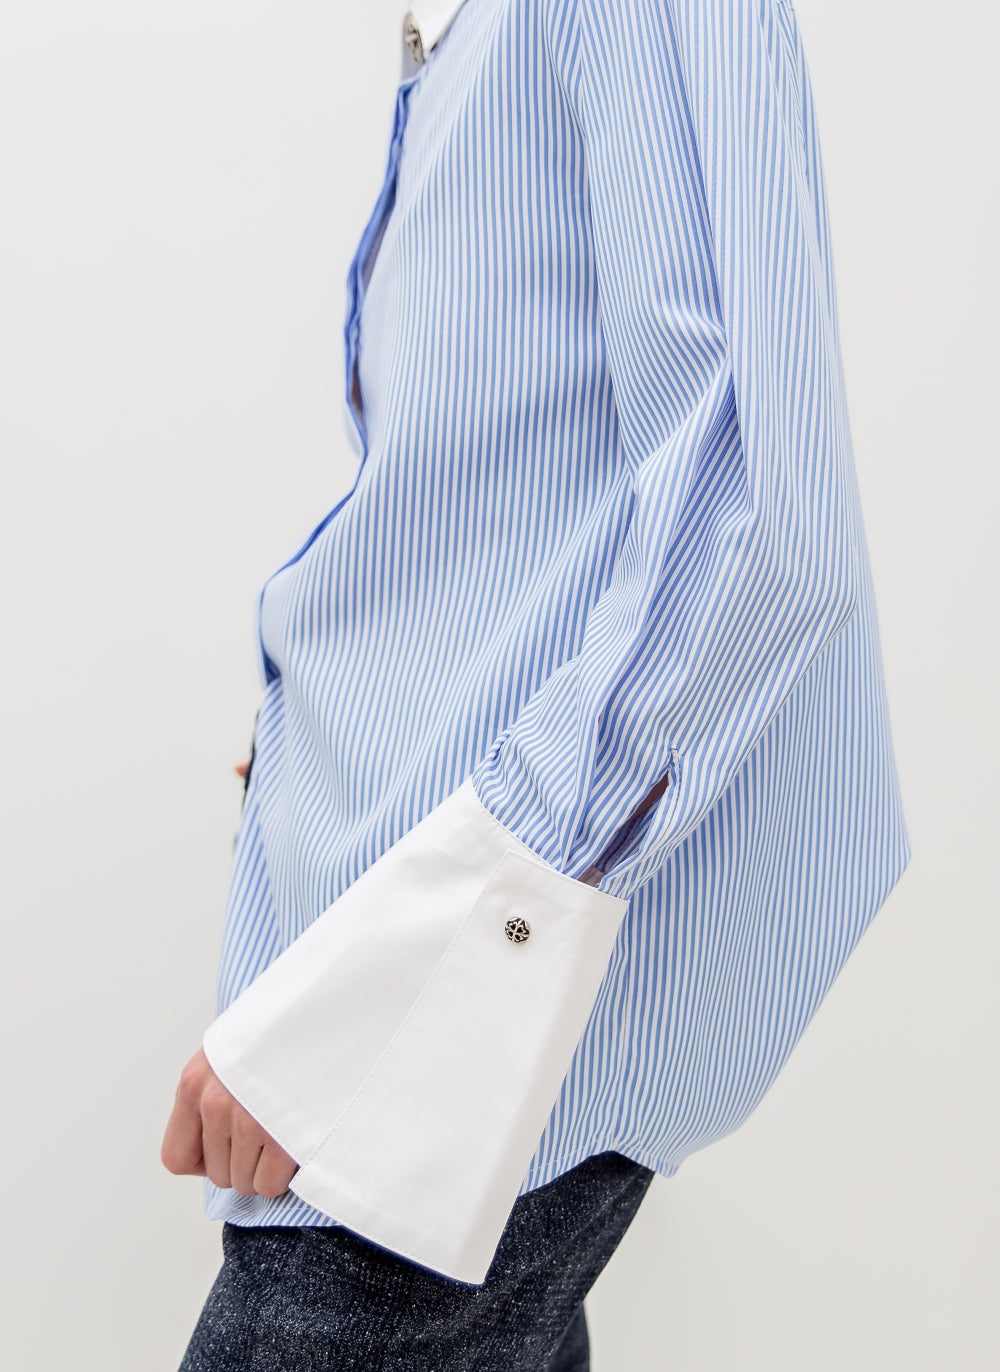 Shirt long sleeves details